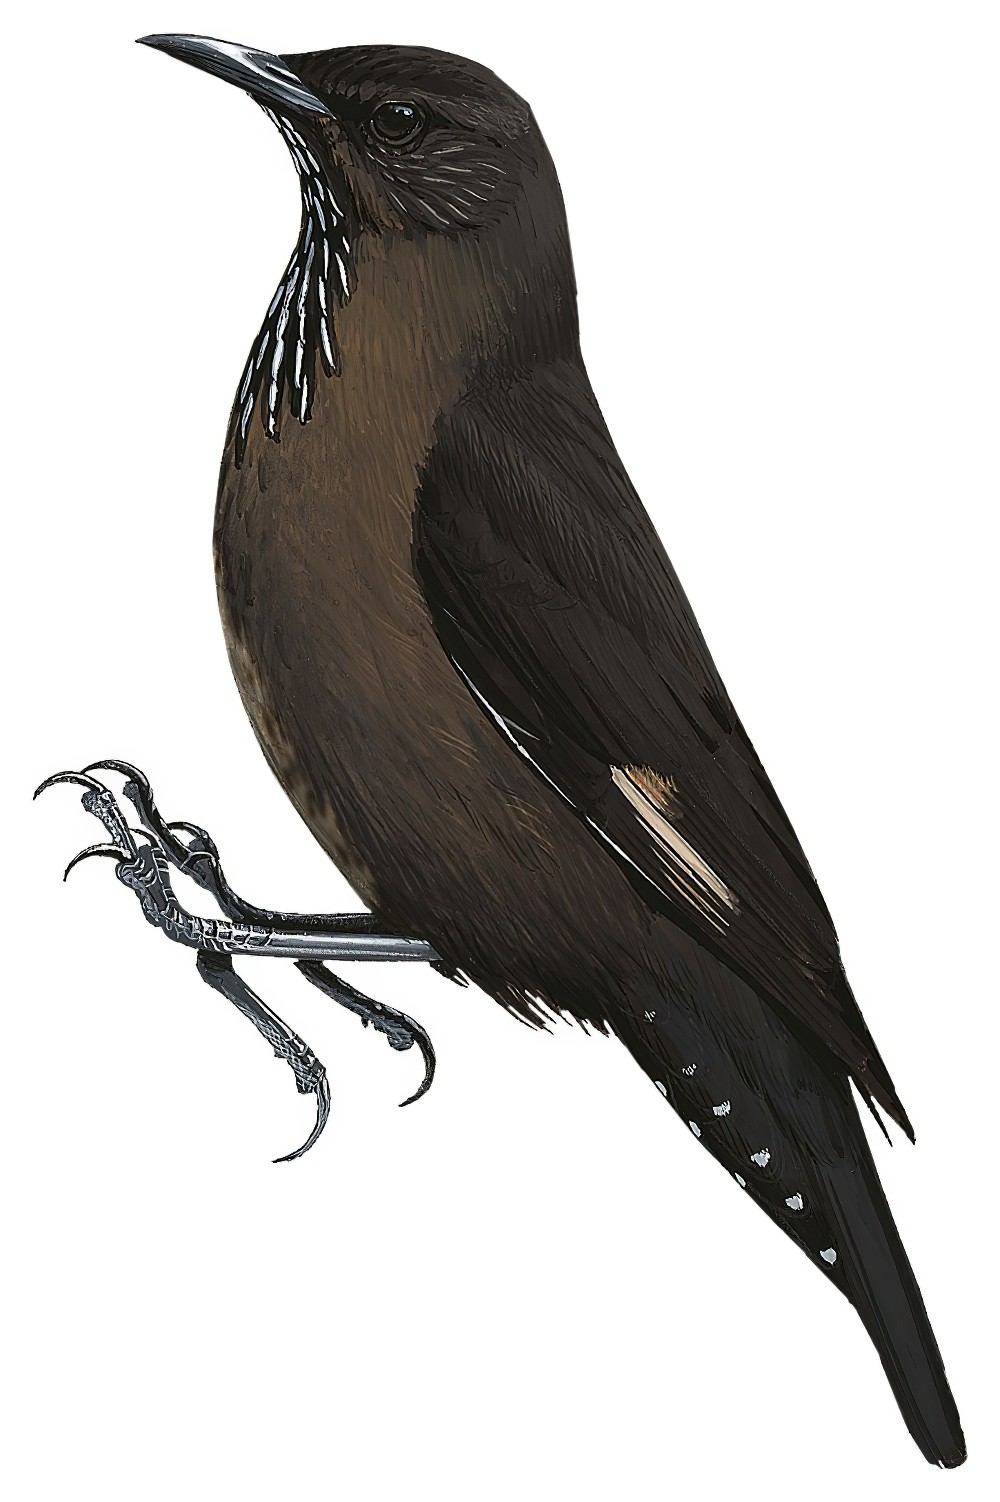 Black-tailed Treecreeper / Climacteris melanurus